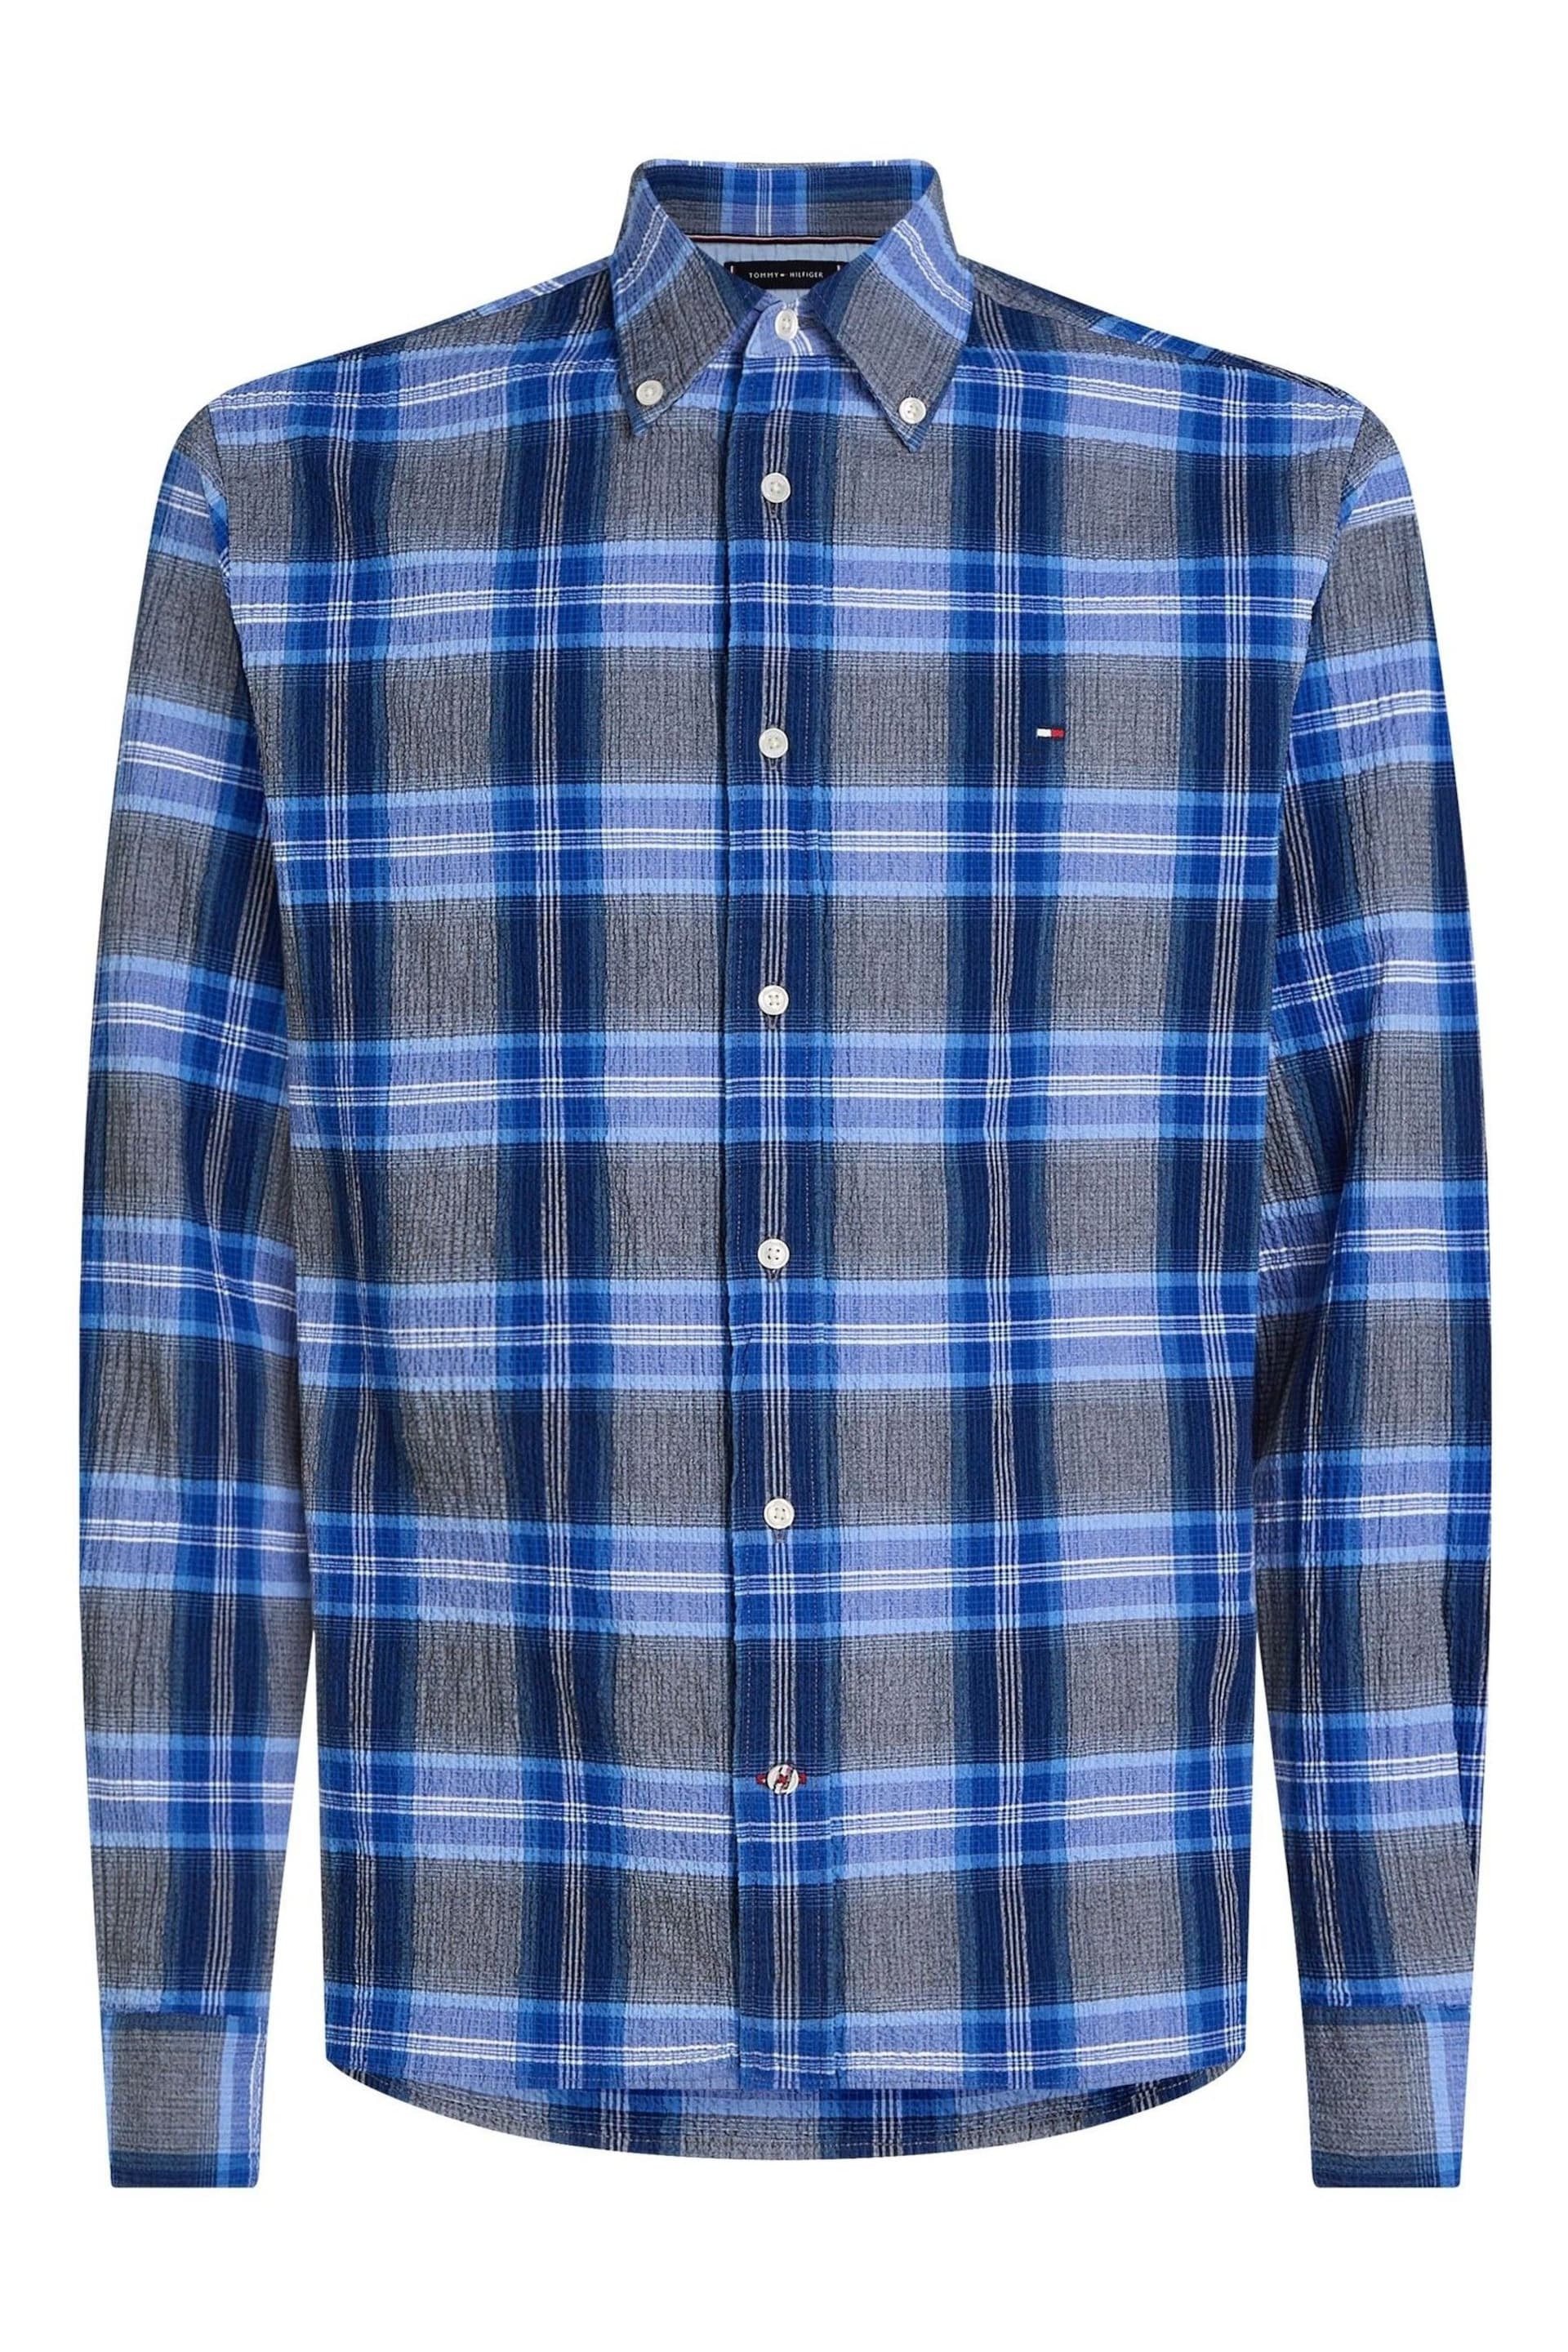 Tommy Hilfiger Blue Tartan Shirt - Image 4 of 6